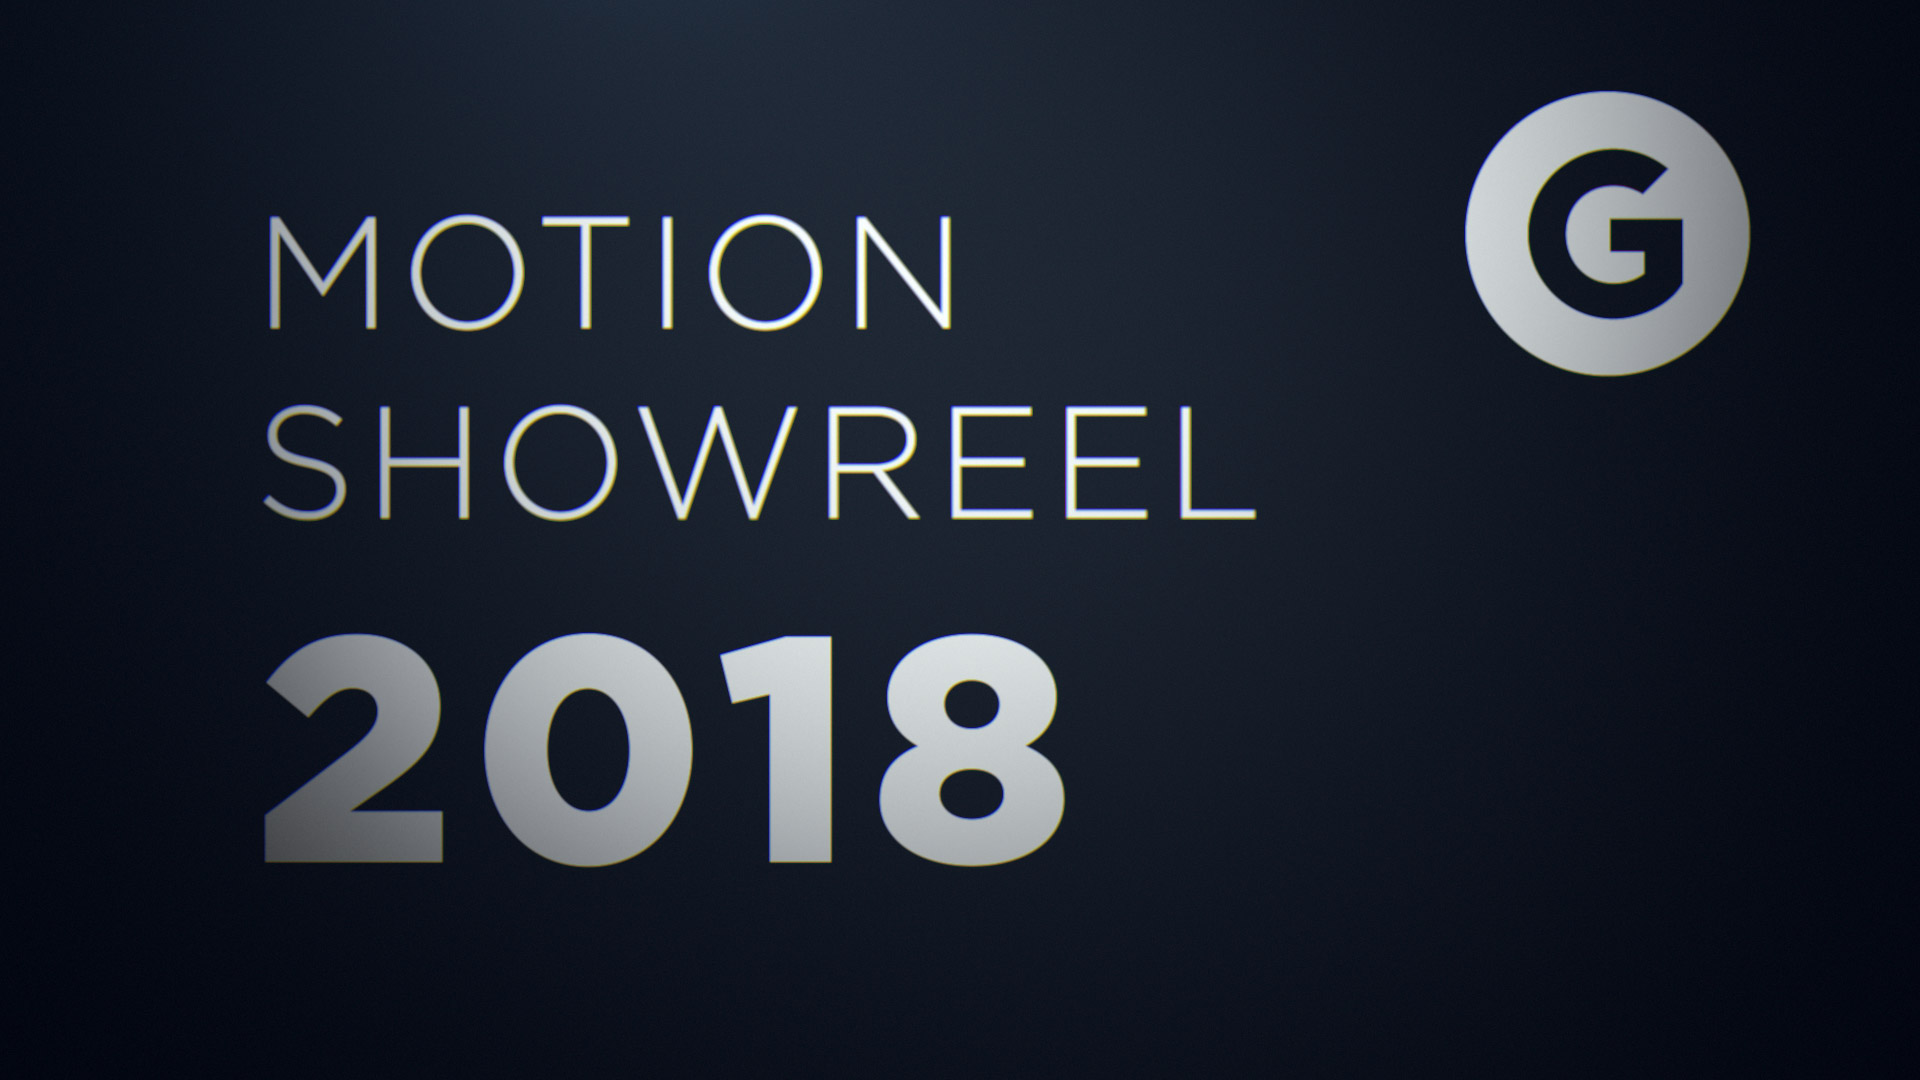 Motion Showreel 2018